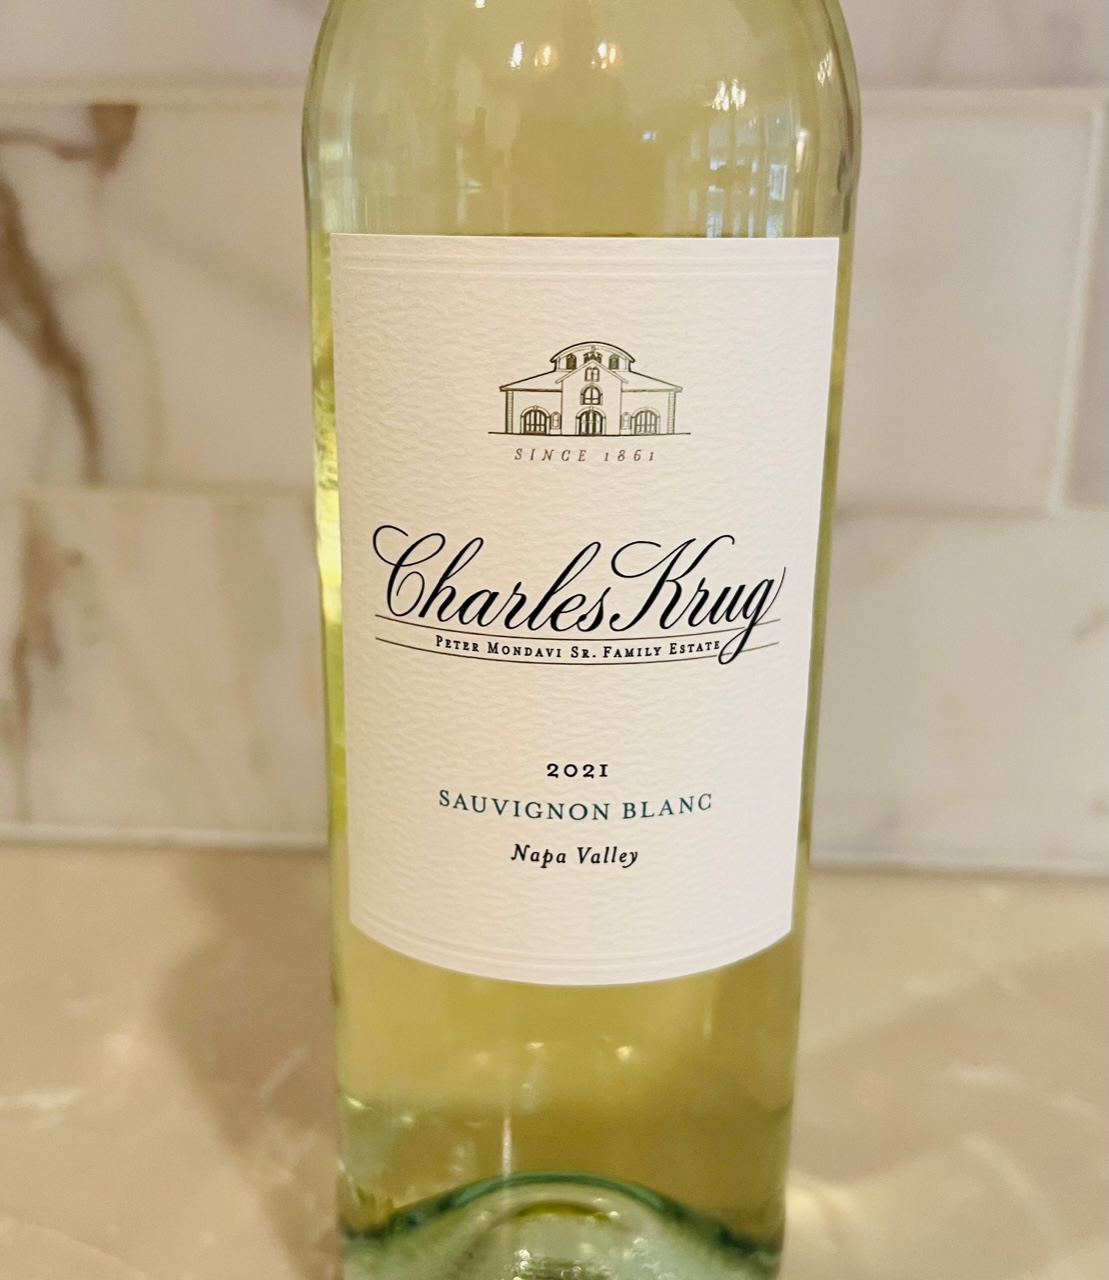 Wines - Charles Krug Napa Valley Cabernet Sauvignon